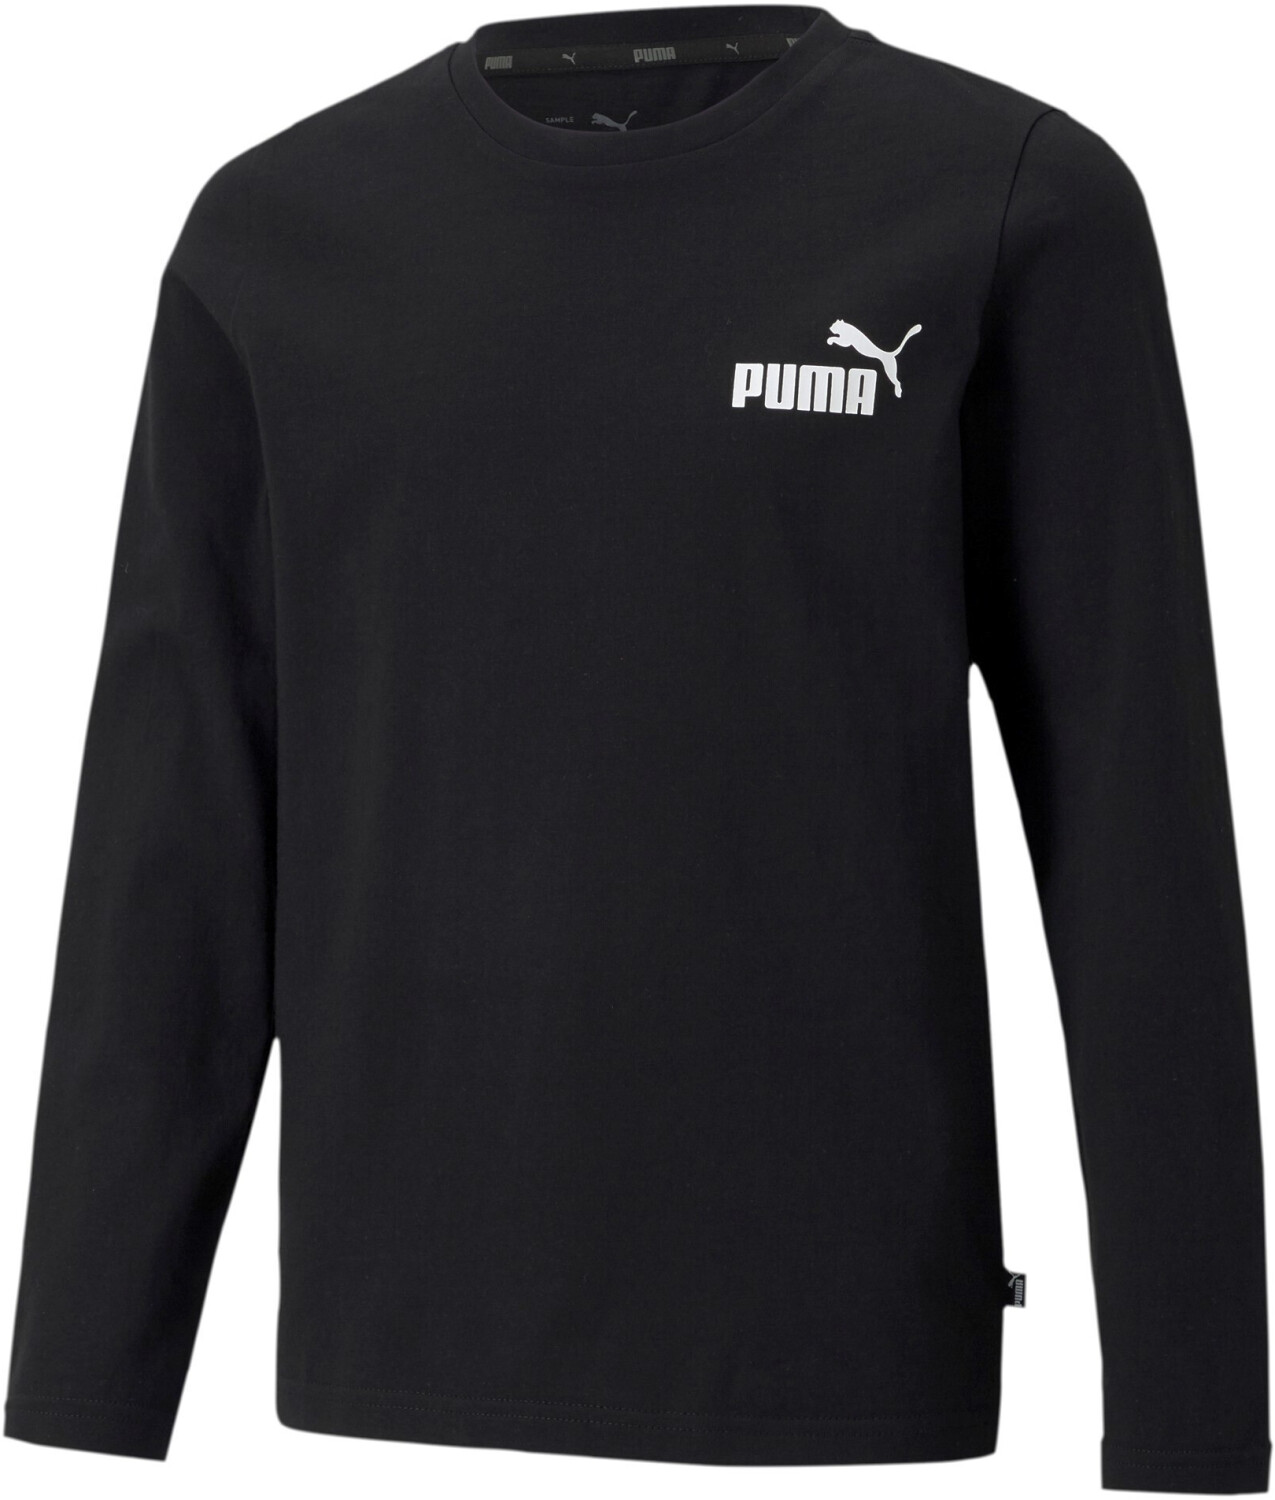 Puma Kinder Langarmshirt (586962-01) € Preisvergleich 16,49 ab | black bei